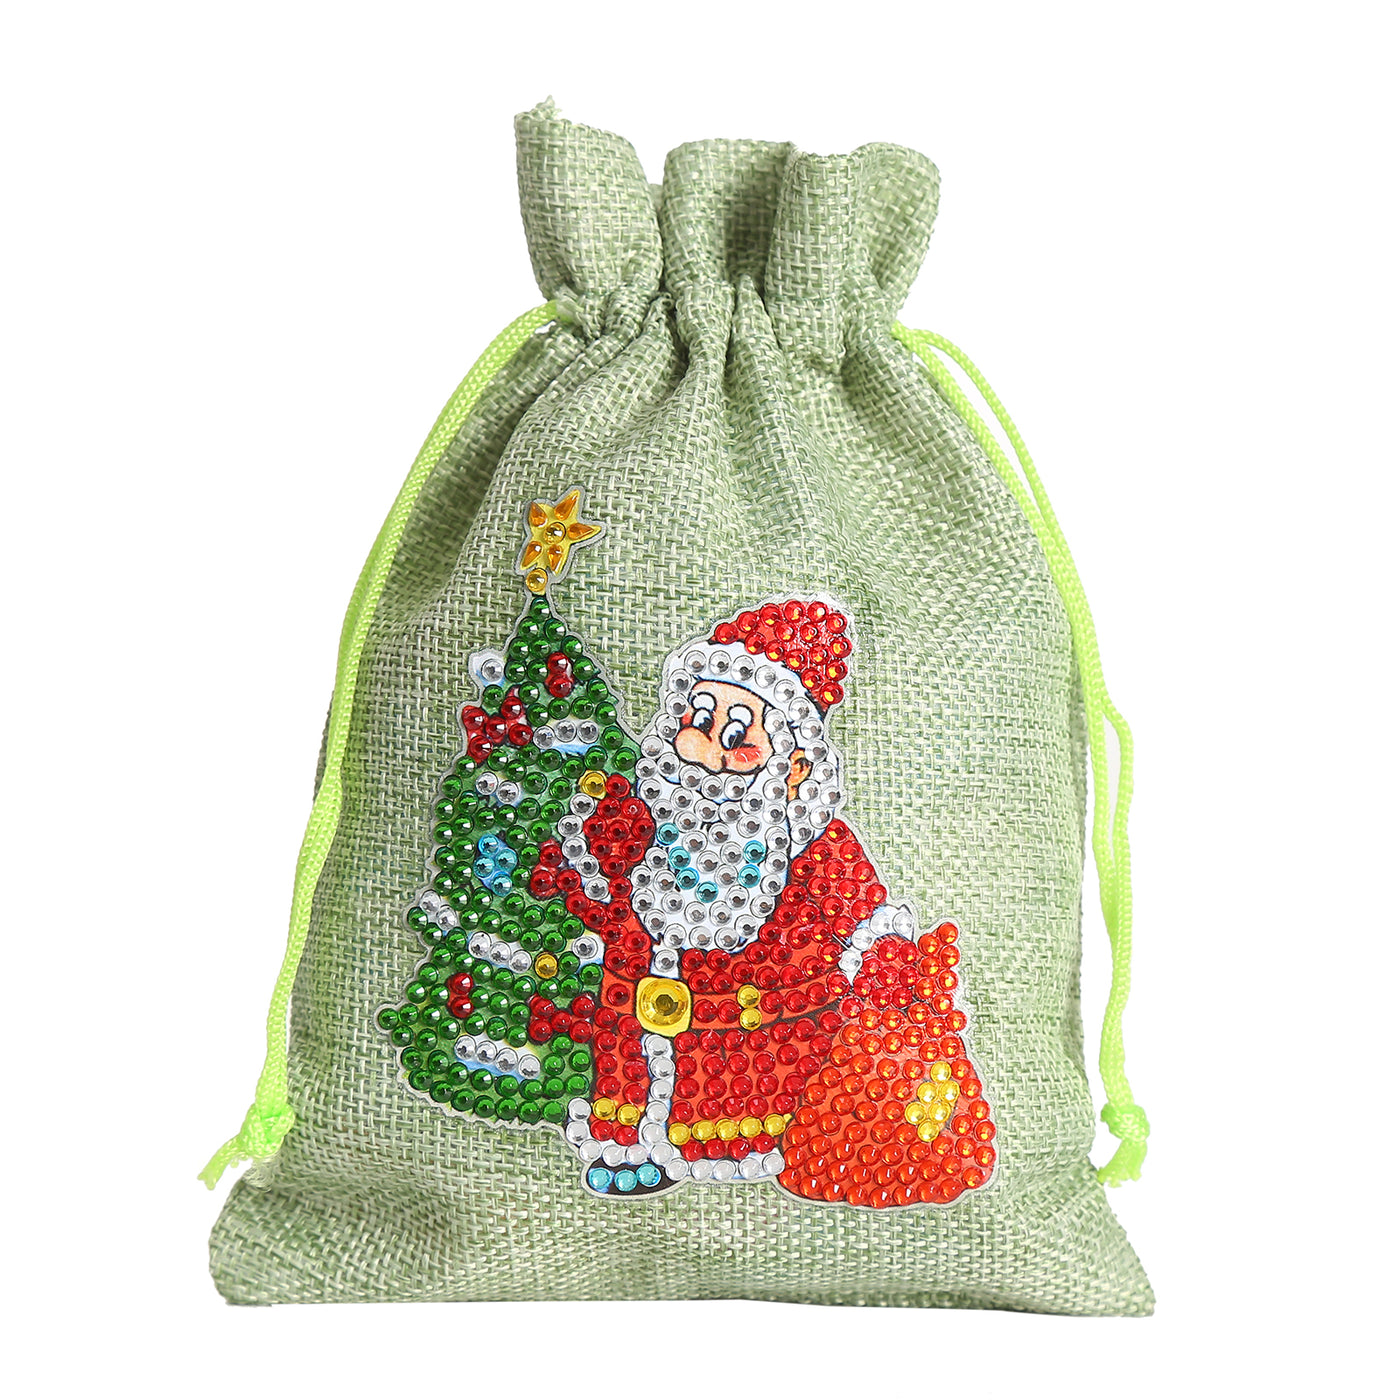 Santa Claus - Small Christmas Bag